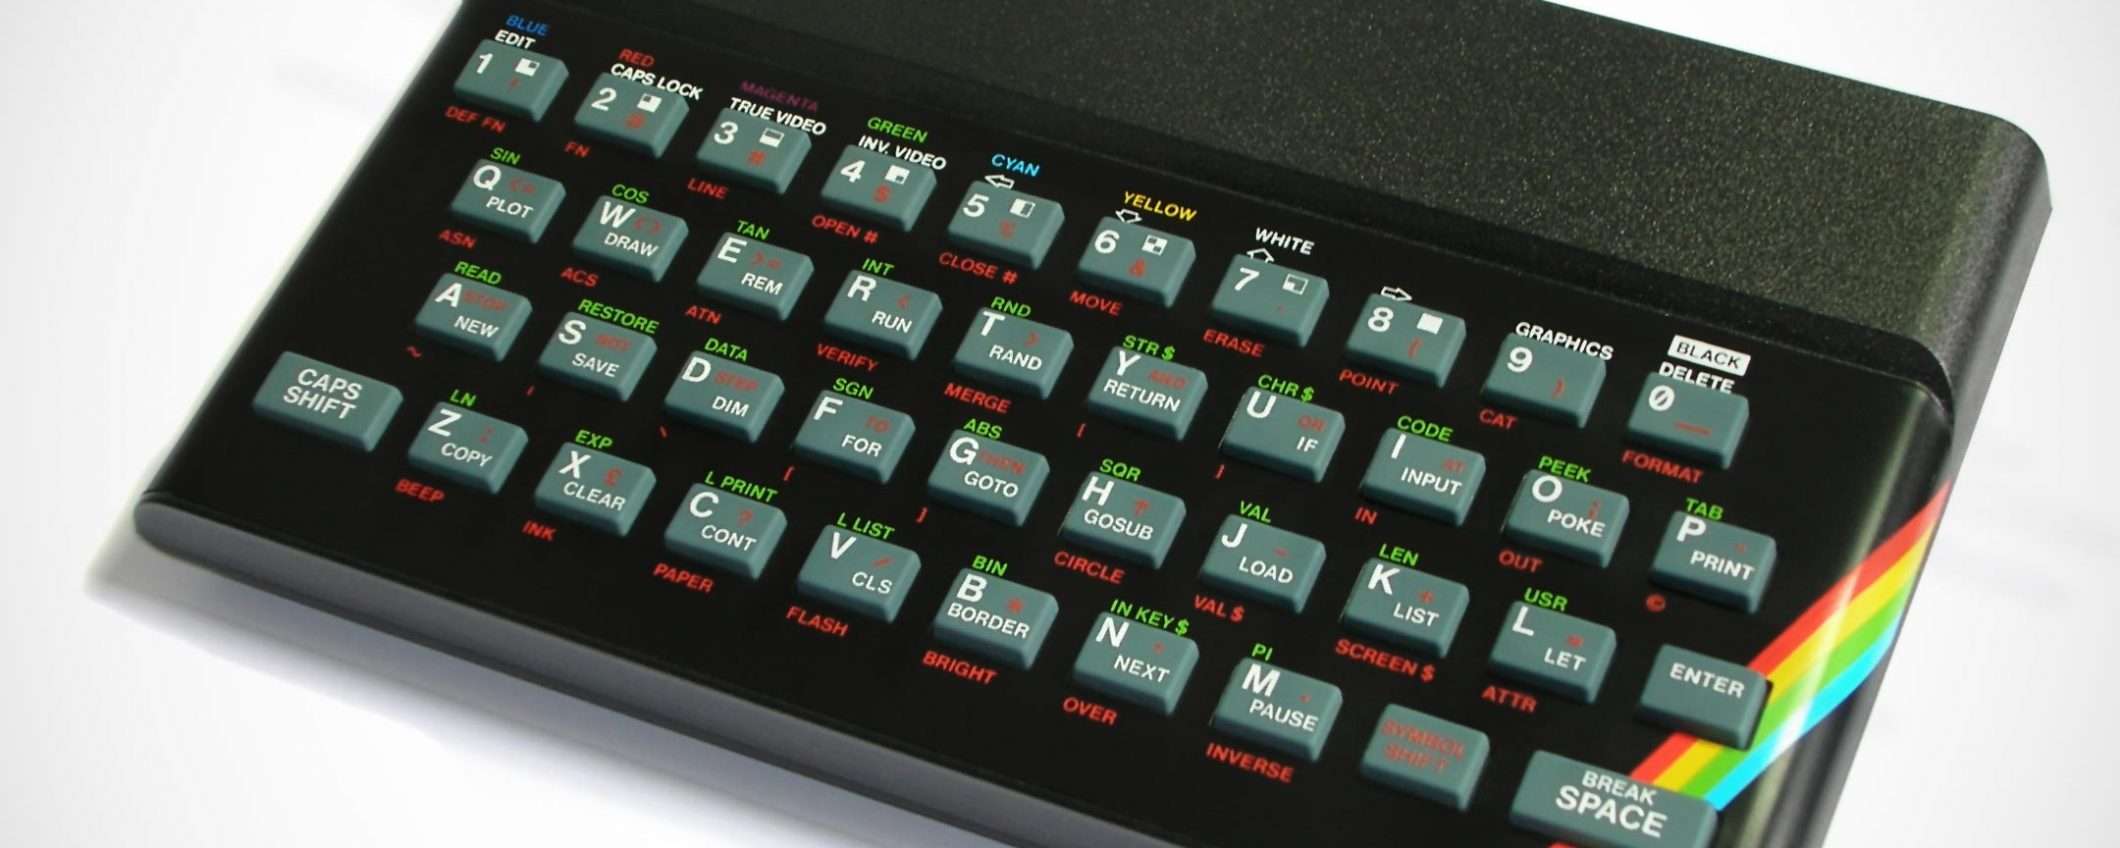 Clive Sinclair: addio al padre di ZX Spectrum